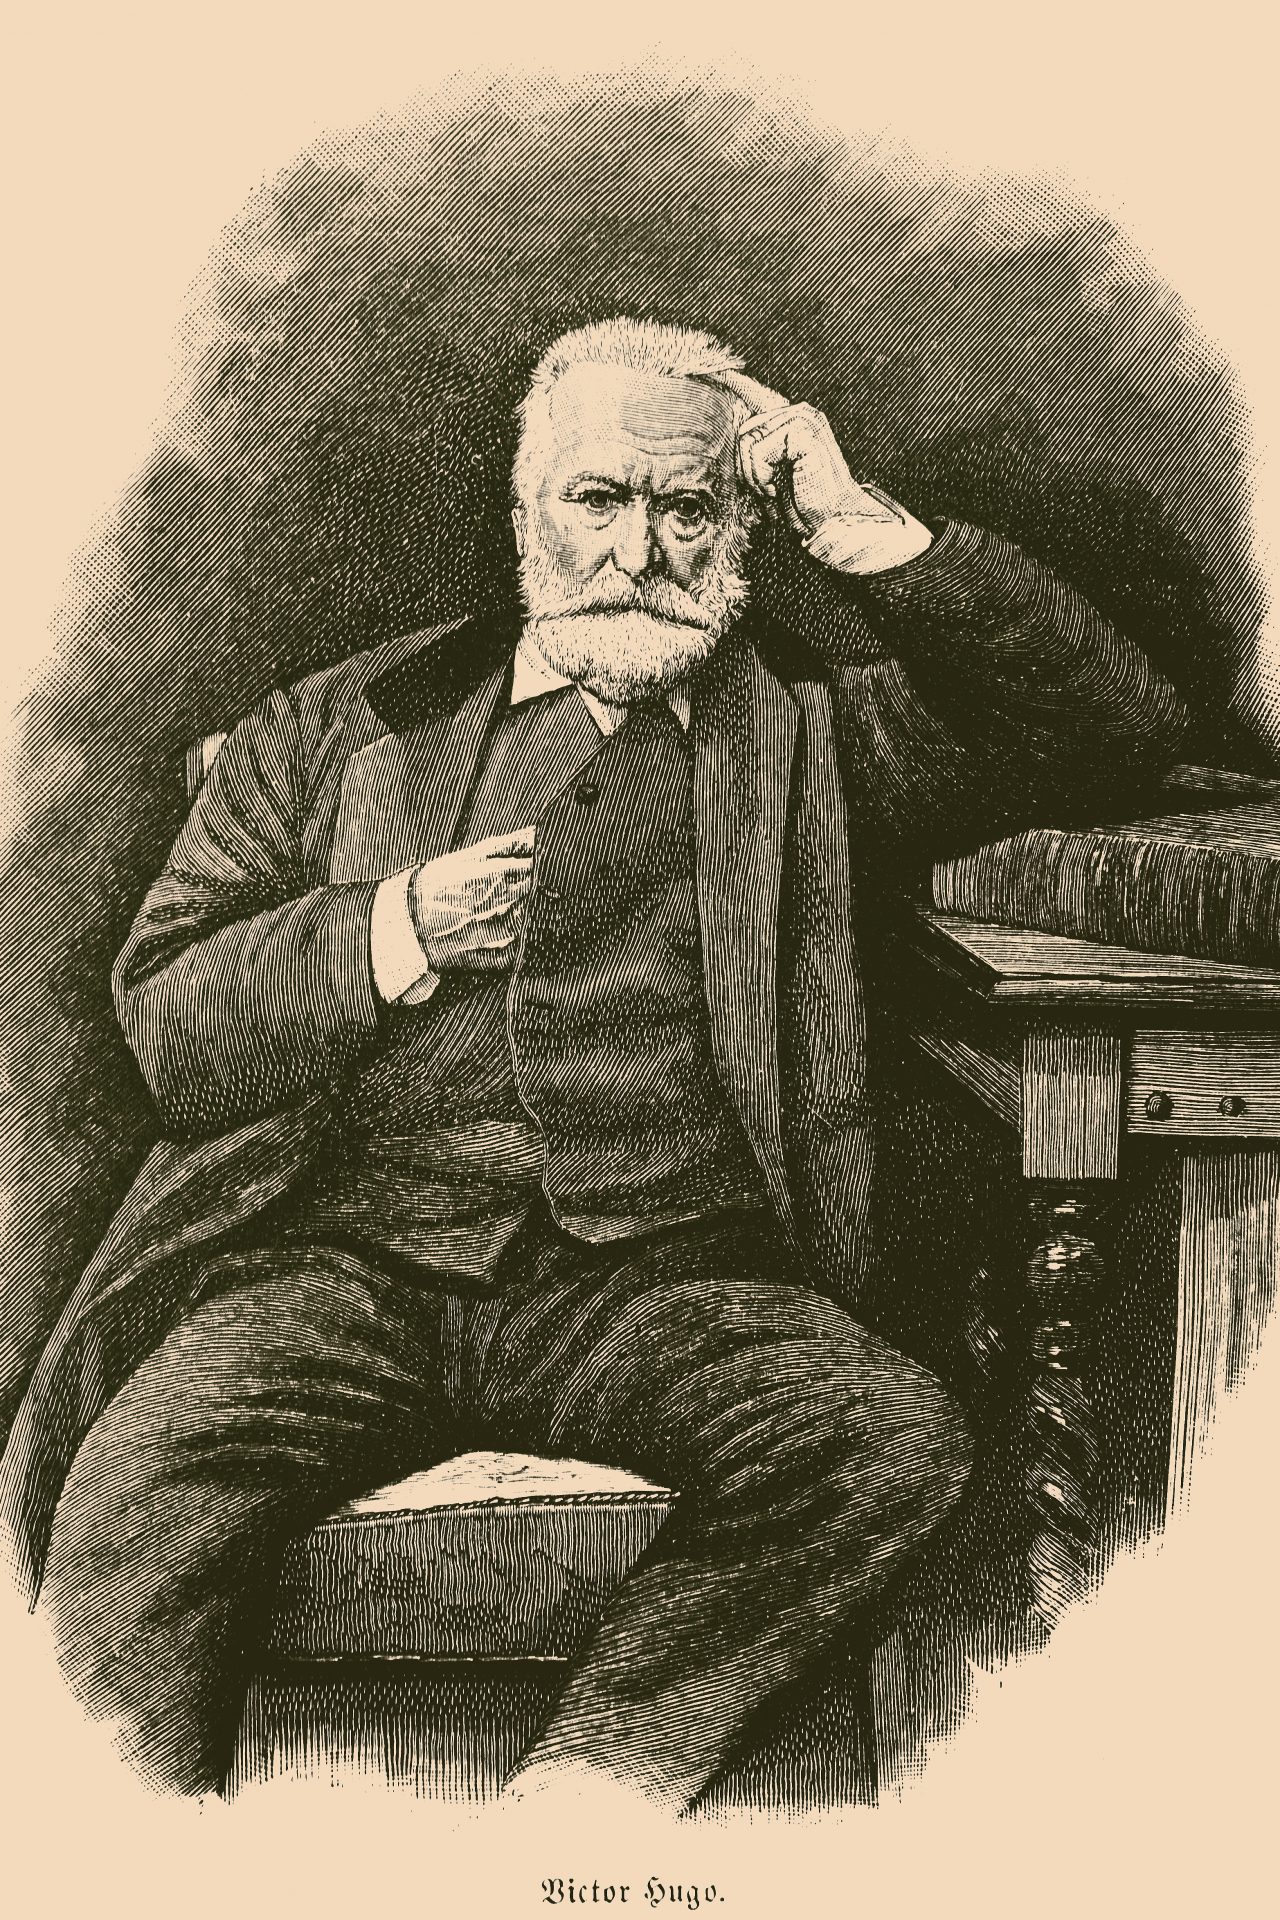 Victor Hugo saved the day